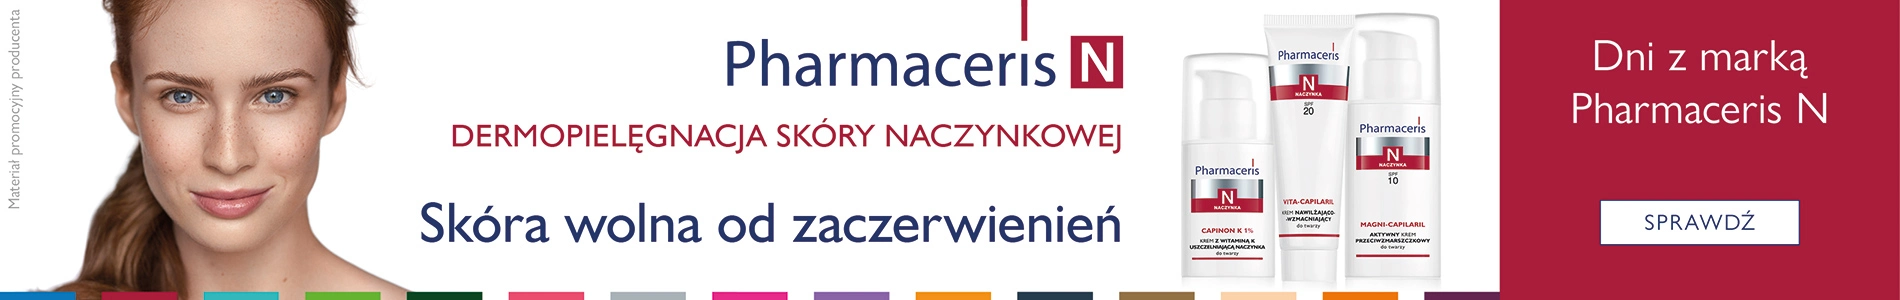 Pharmaceris N